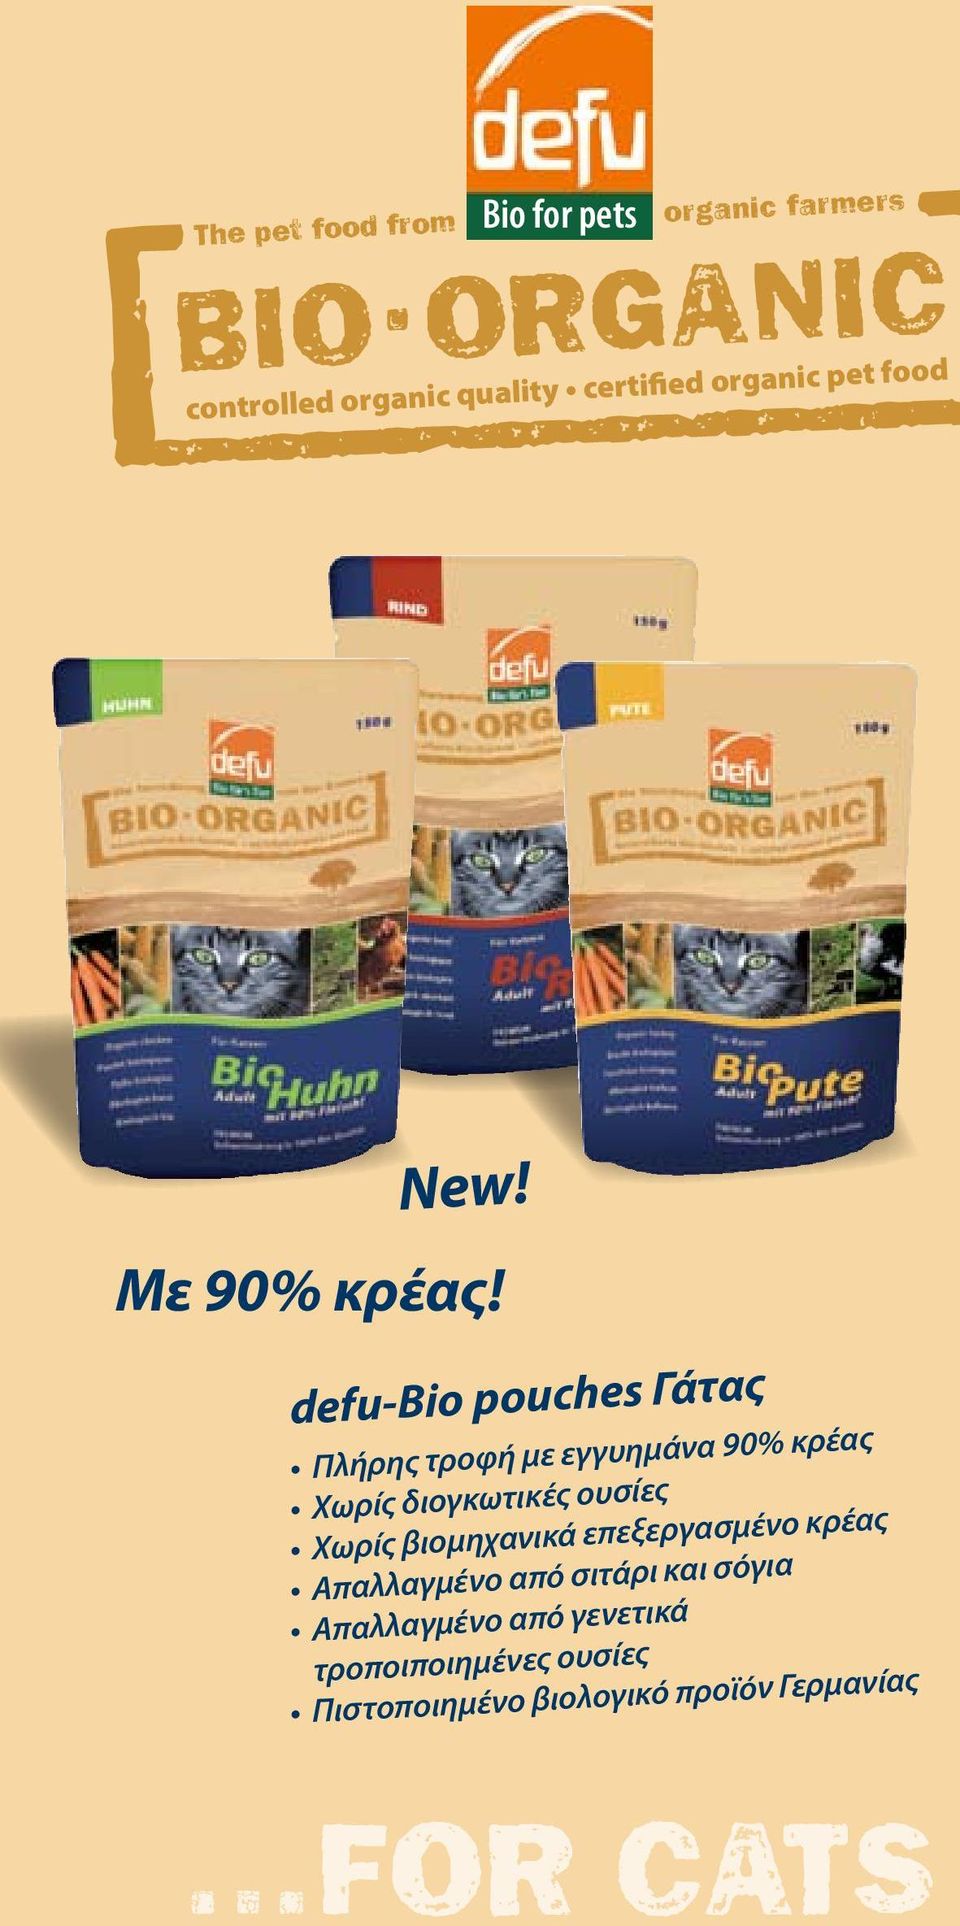 defu-bio pouches Γάτας Πλήρης τροφή με εγγυημάνα 90% κρέας Χωρίς διογκωτικές ουσίες Χωρίς